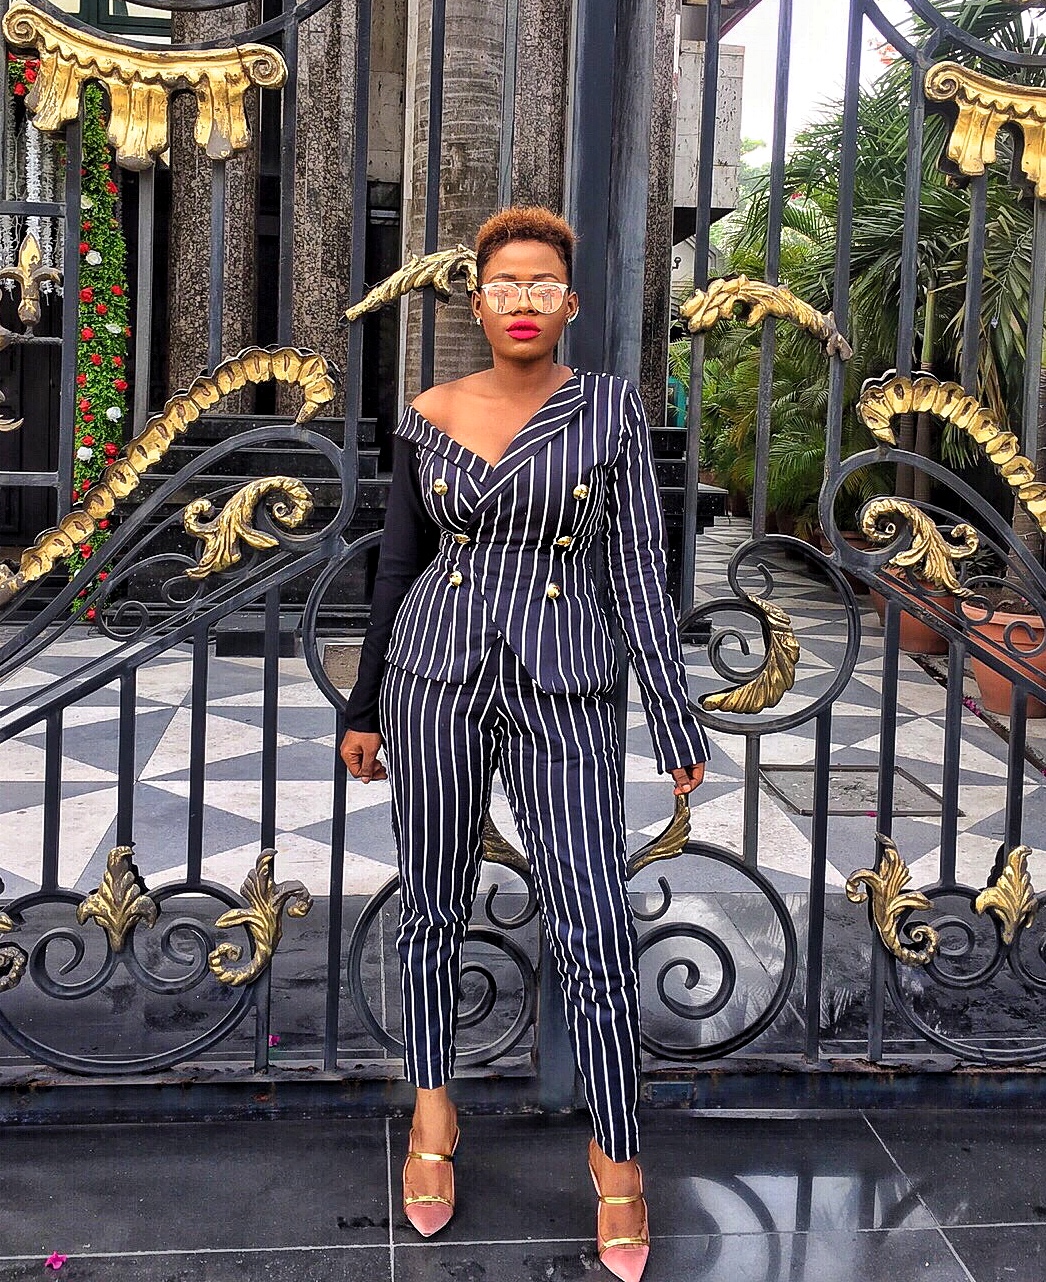 Fashion Bombshell Of The Day: Sandra From Nigeria! – Fashion Bomb Daily